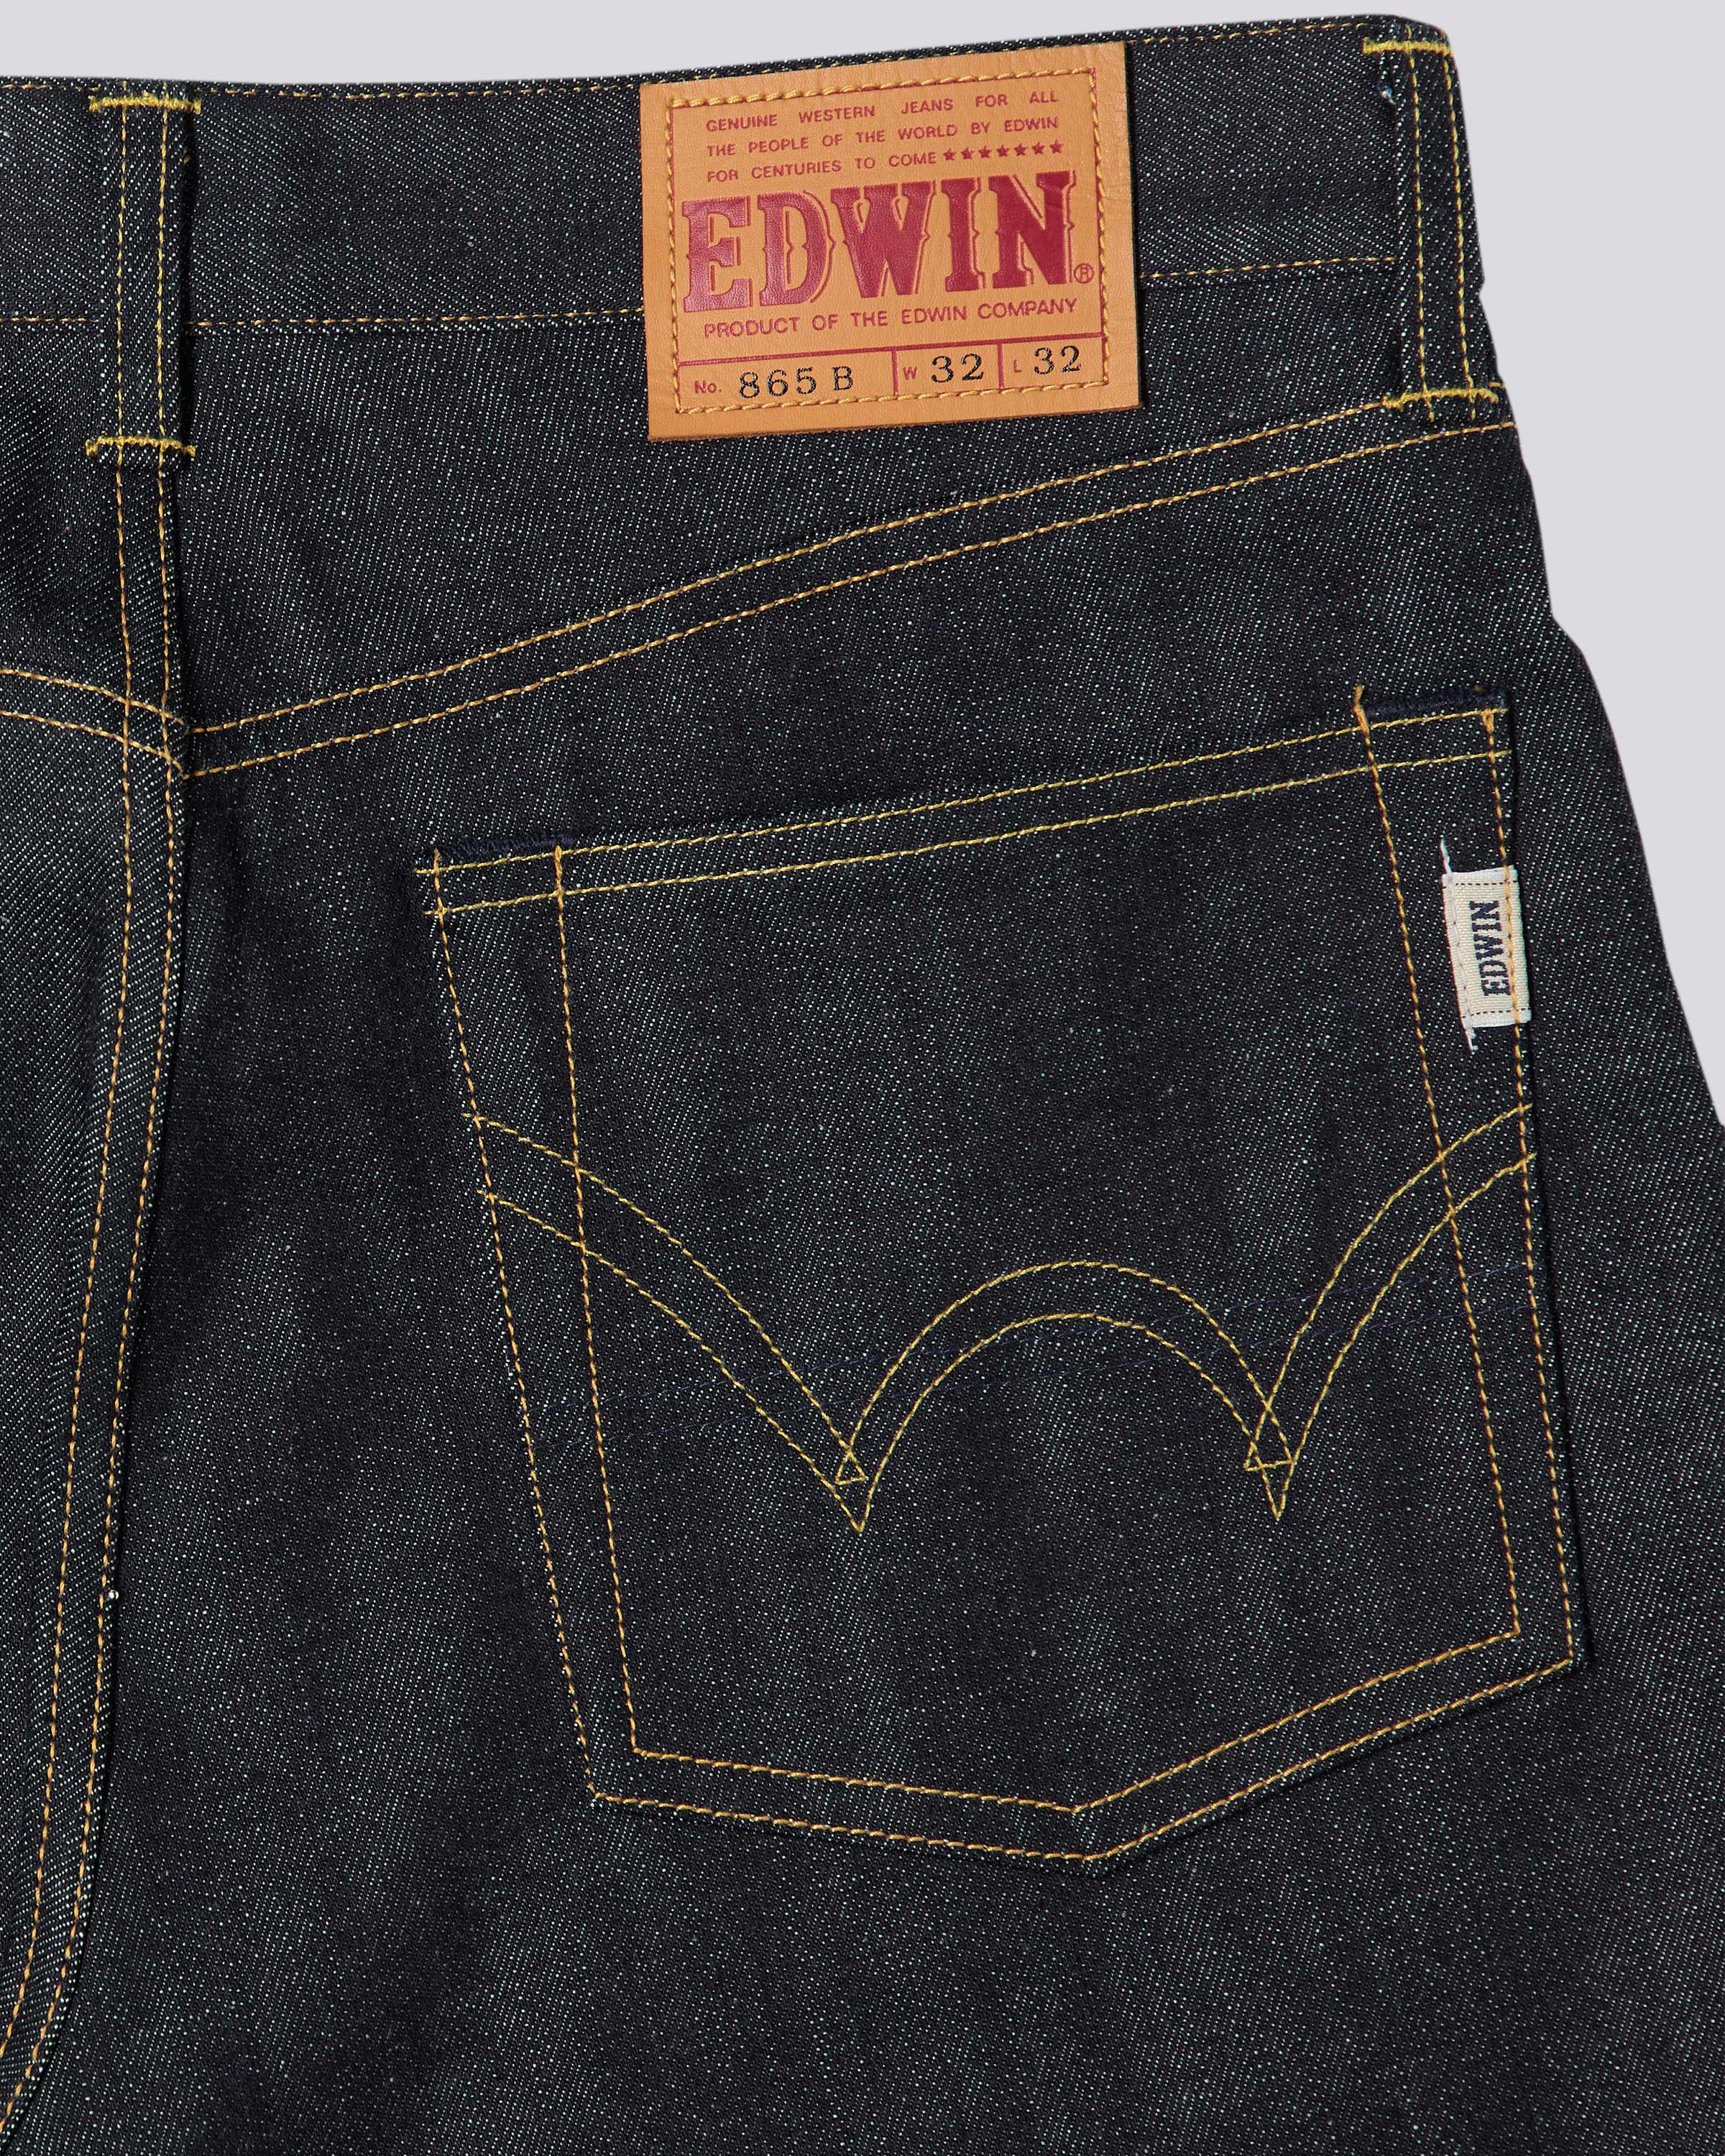 edwin jeans official website